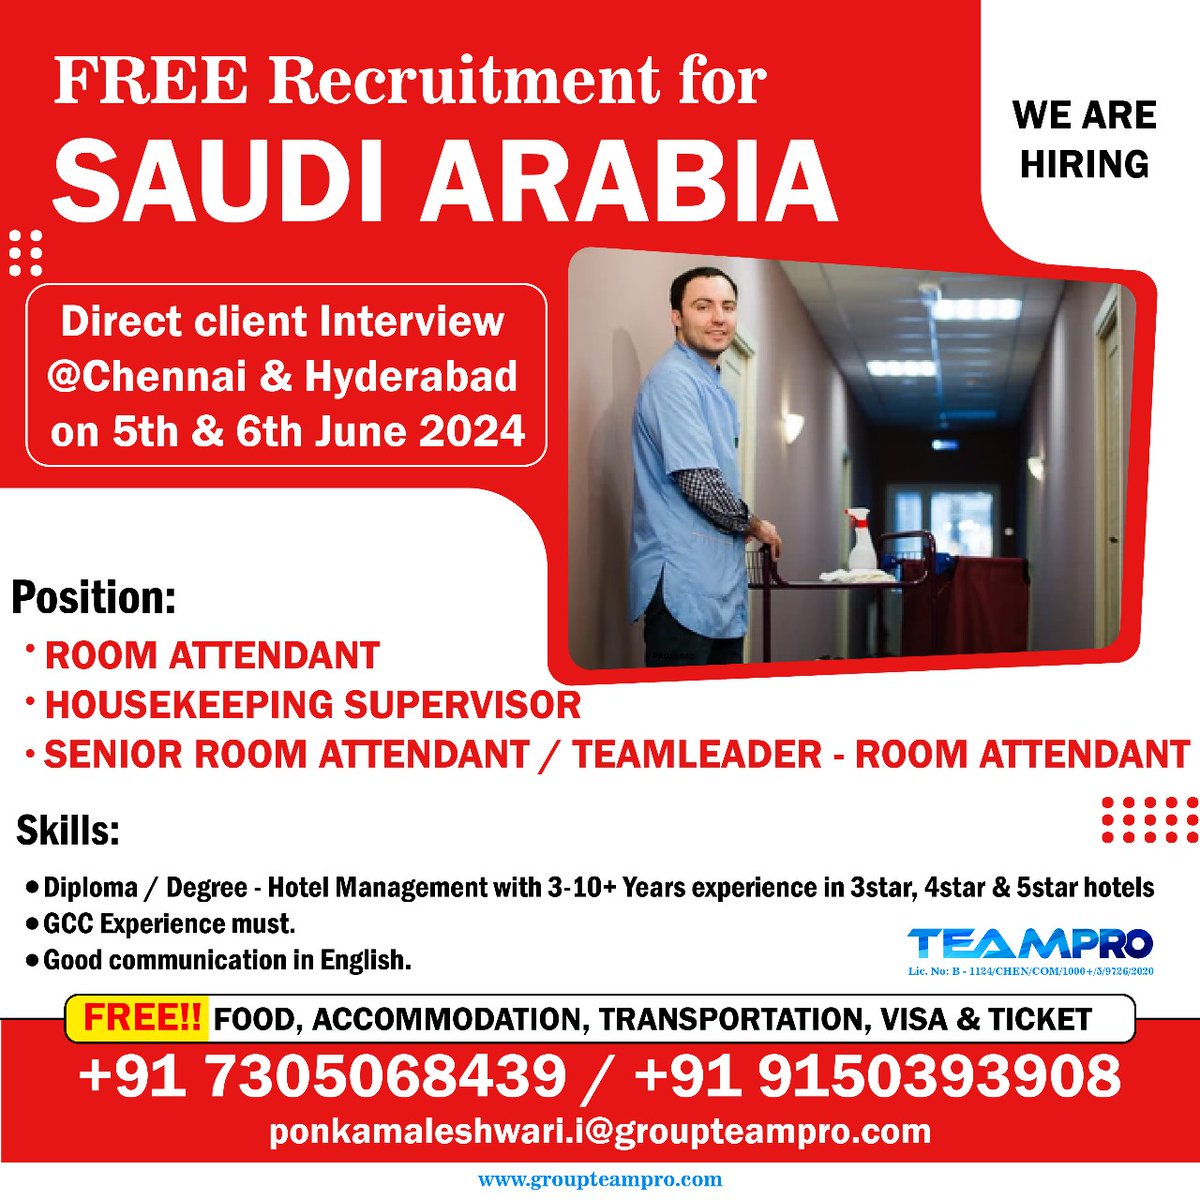 #freerecruitment #saudijobs #saudijobseekers #housekeeping #roomattendant #teamleader #seniorroomattendant #housekeepingsupervisor #facilitymanitenance #immediatejoiners #shortlistingunderprogress #directinterview